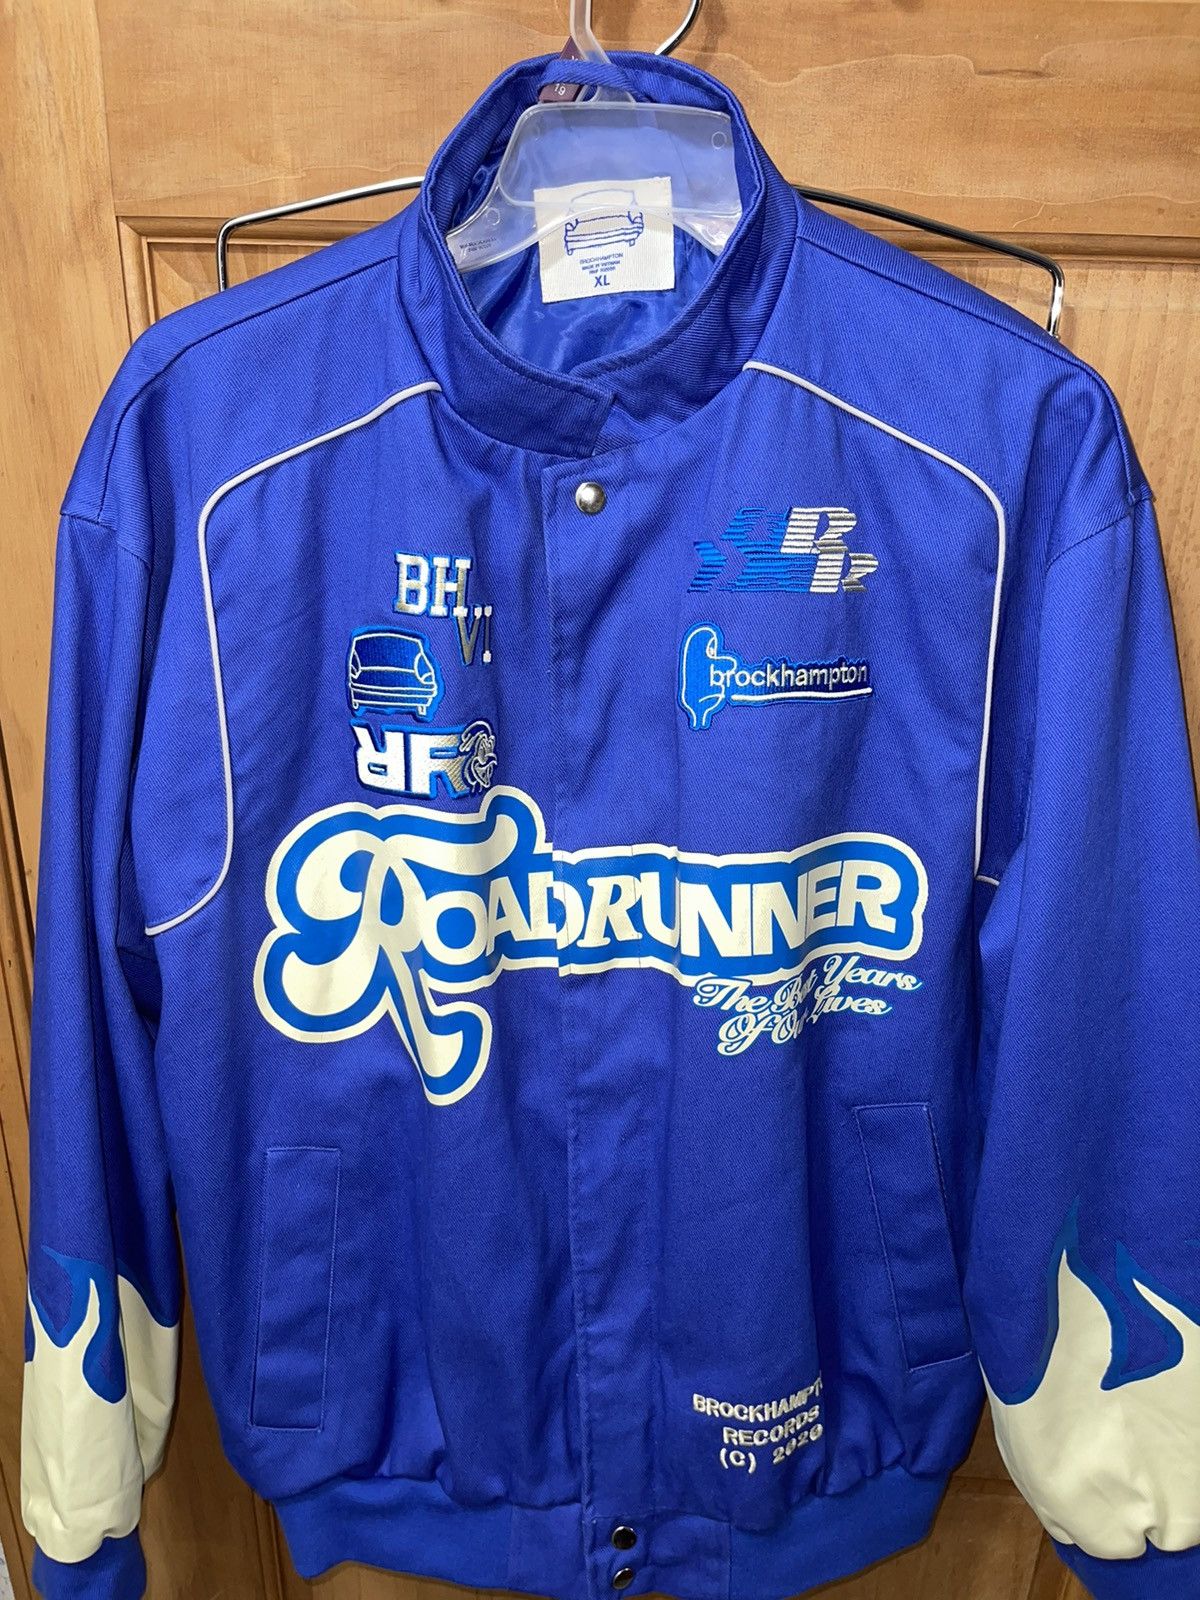 Brockhampton Brockhampton Road Runner Varsity Jacket | Grailed